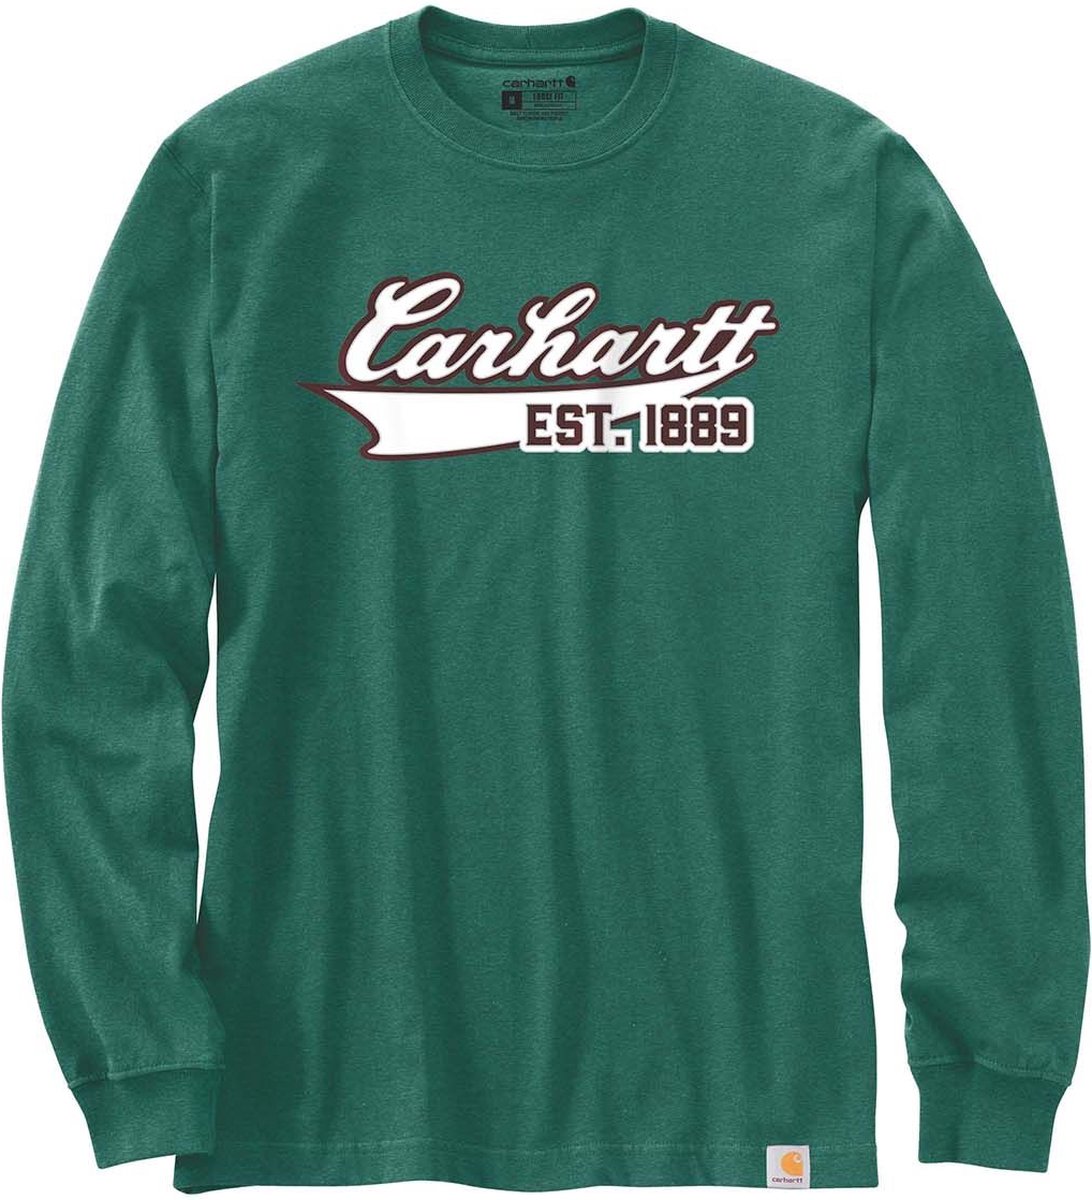 Carhartt T-shirt - Lange Mouw - Script Grafische Print - Northwood Green - Maat L (valt als XL)